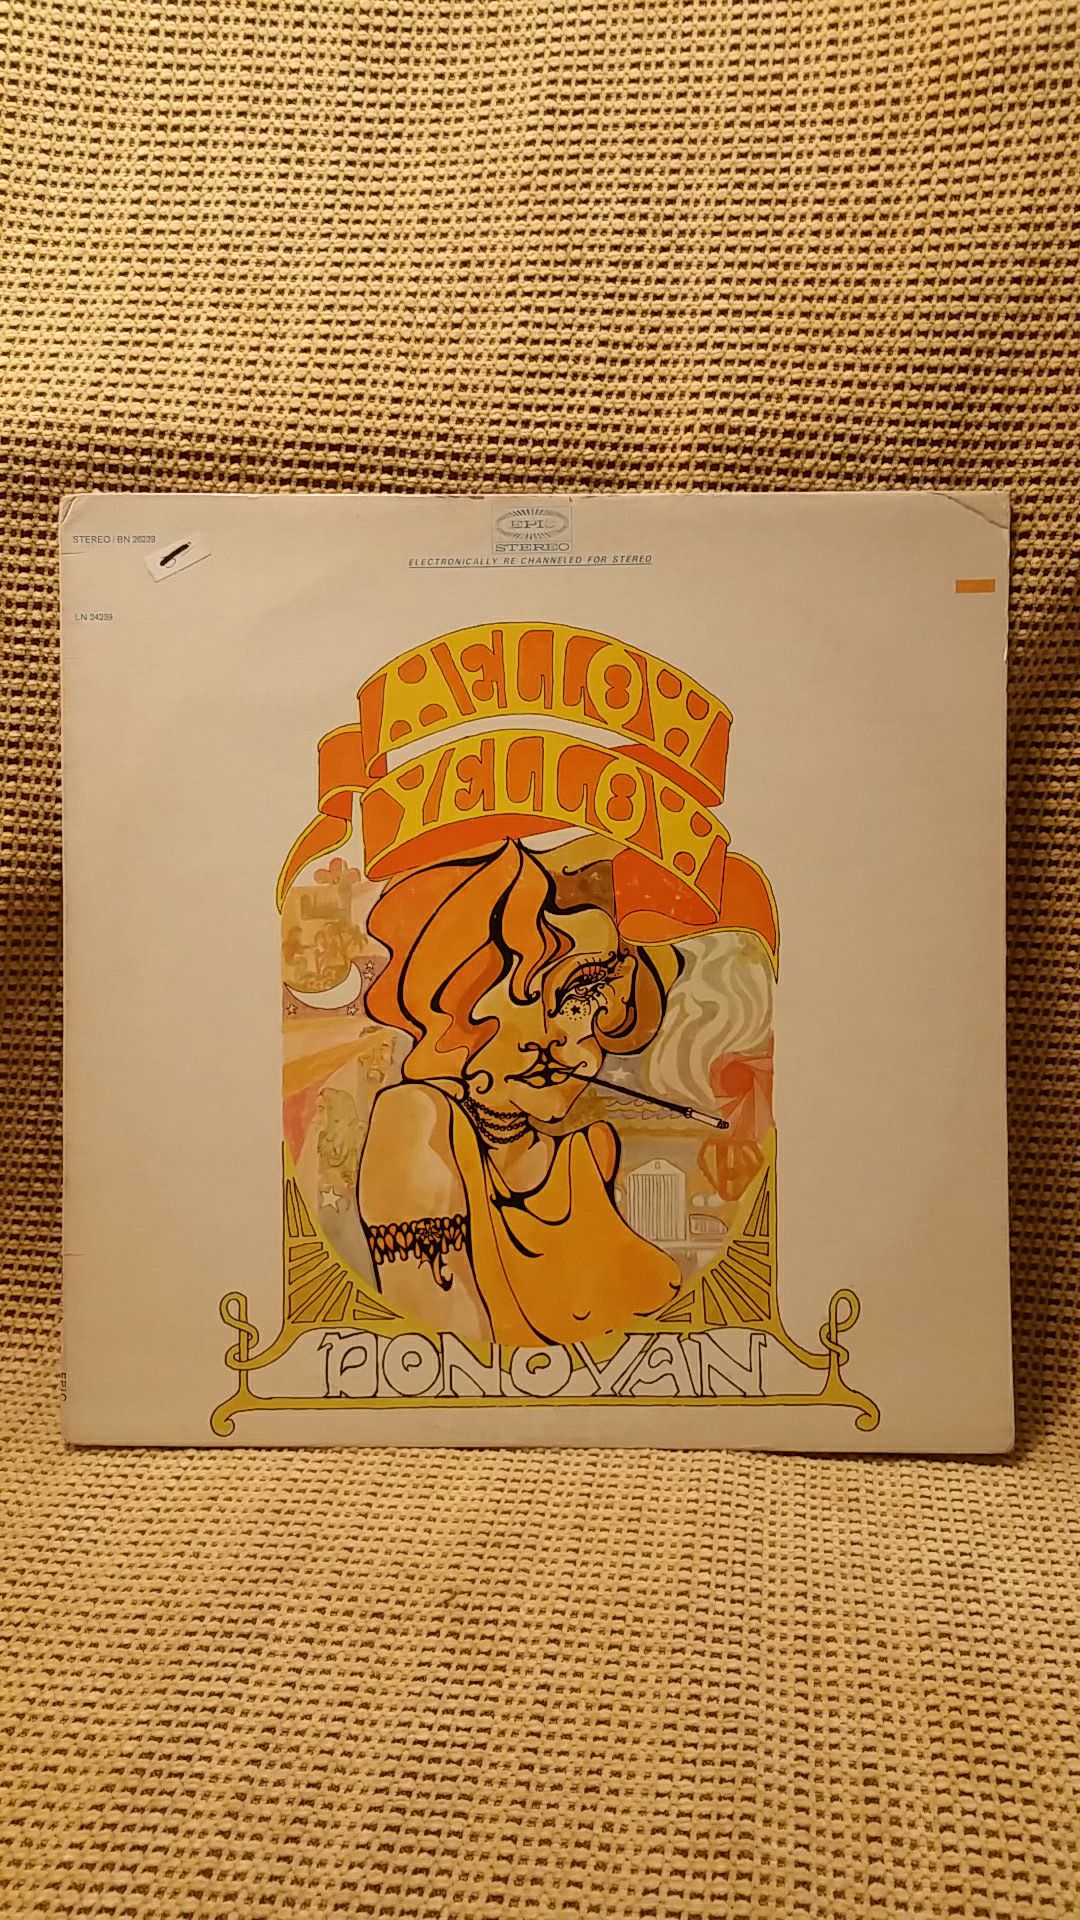 Mellow Yellow "Donovan" vinyl record Rock